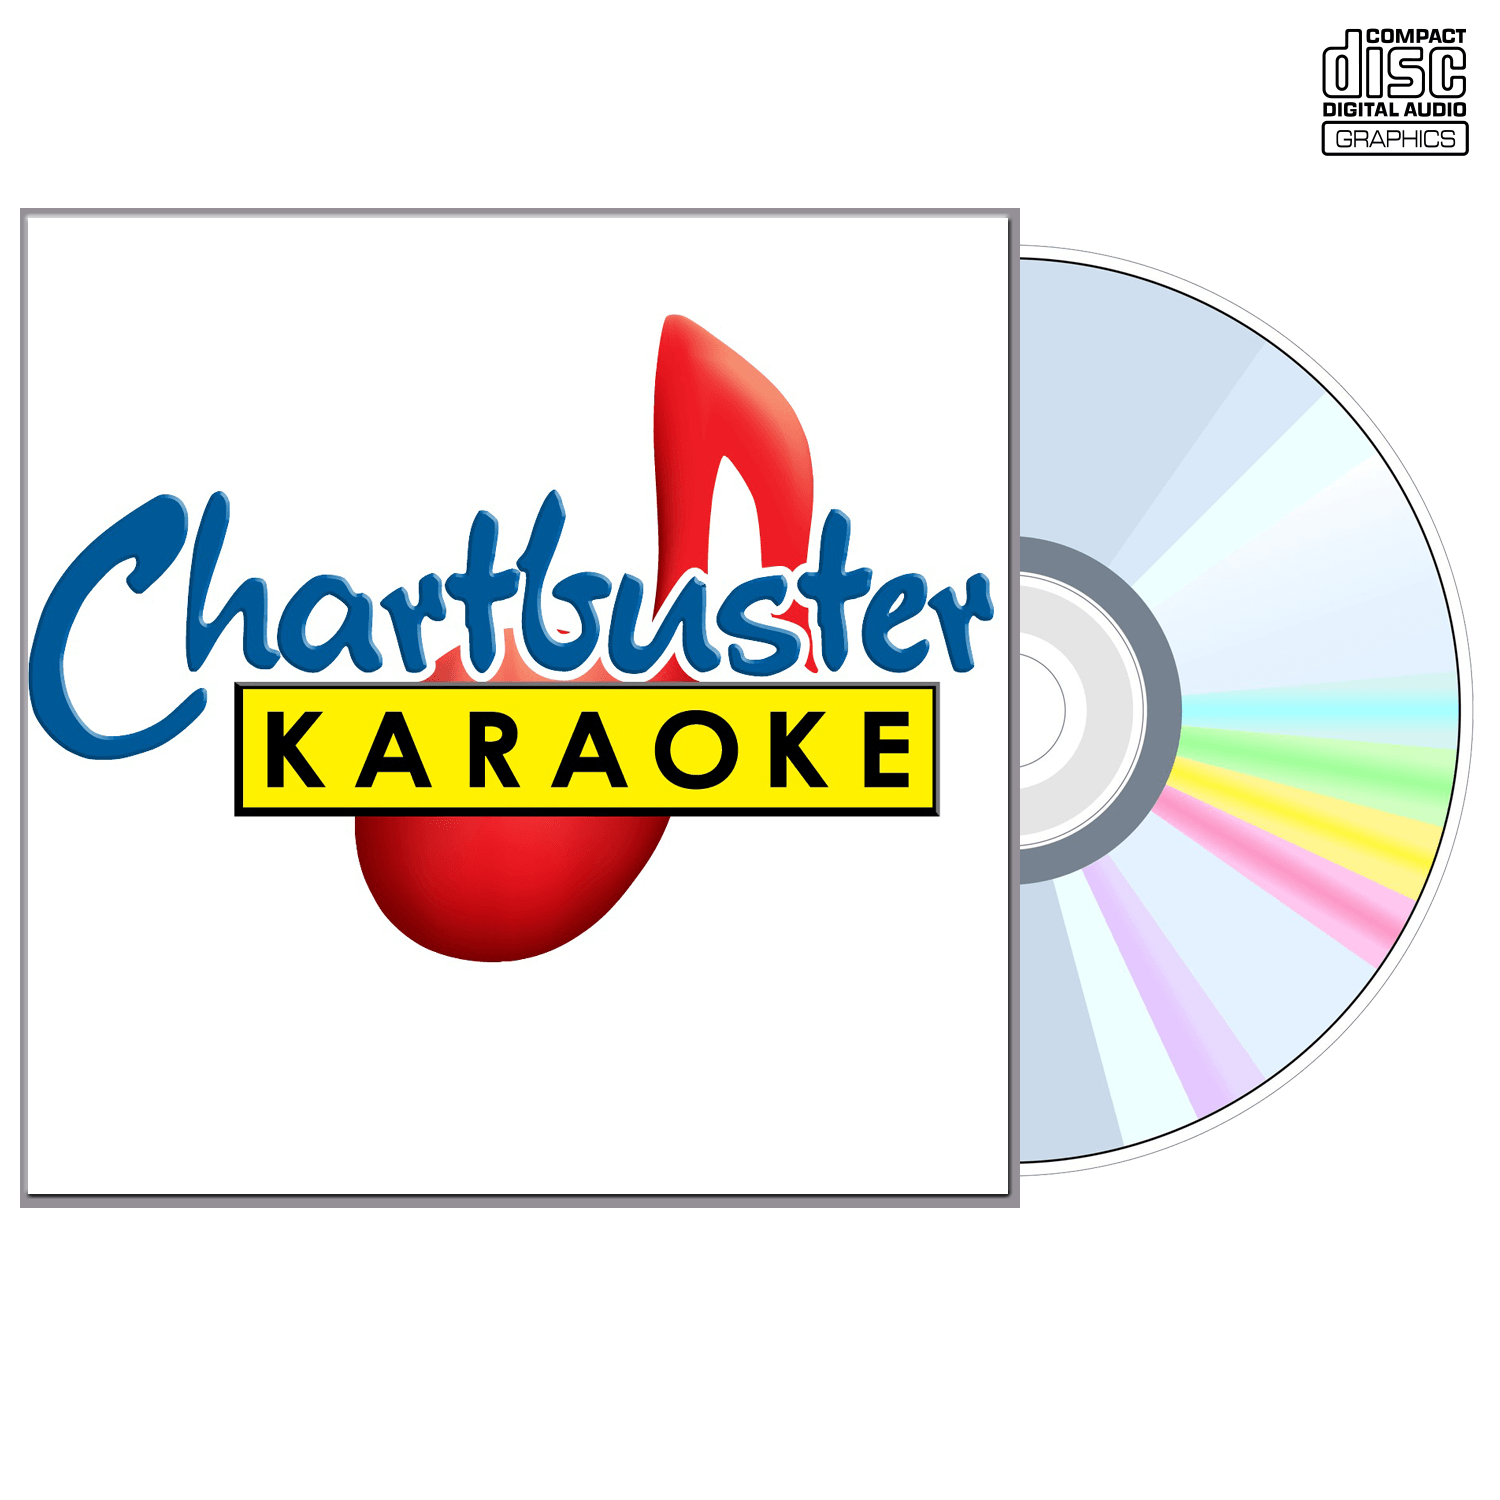 Best Of Trisha Yearwood - CD+G - Chartbuster Karaoke - Karaoke Home Entertainment